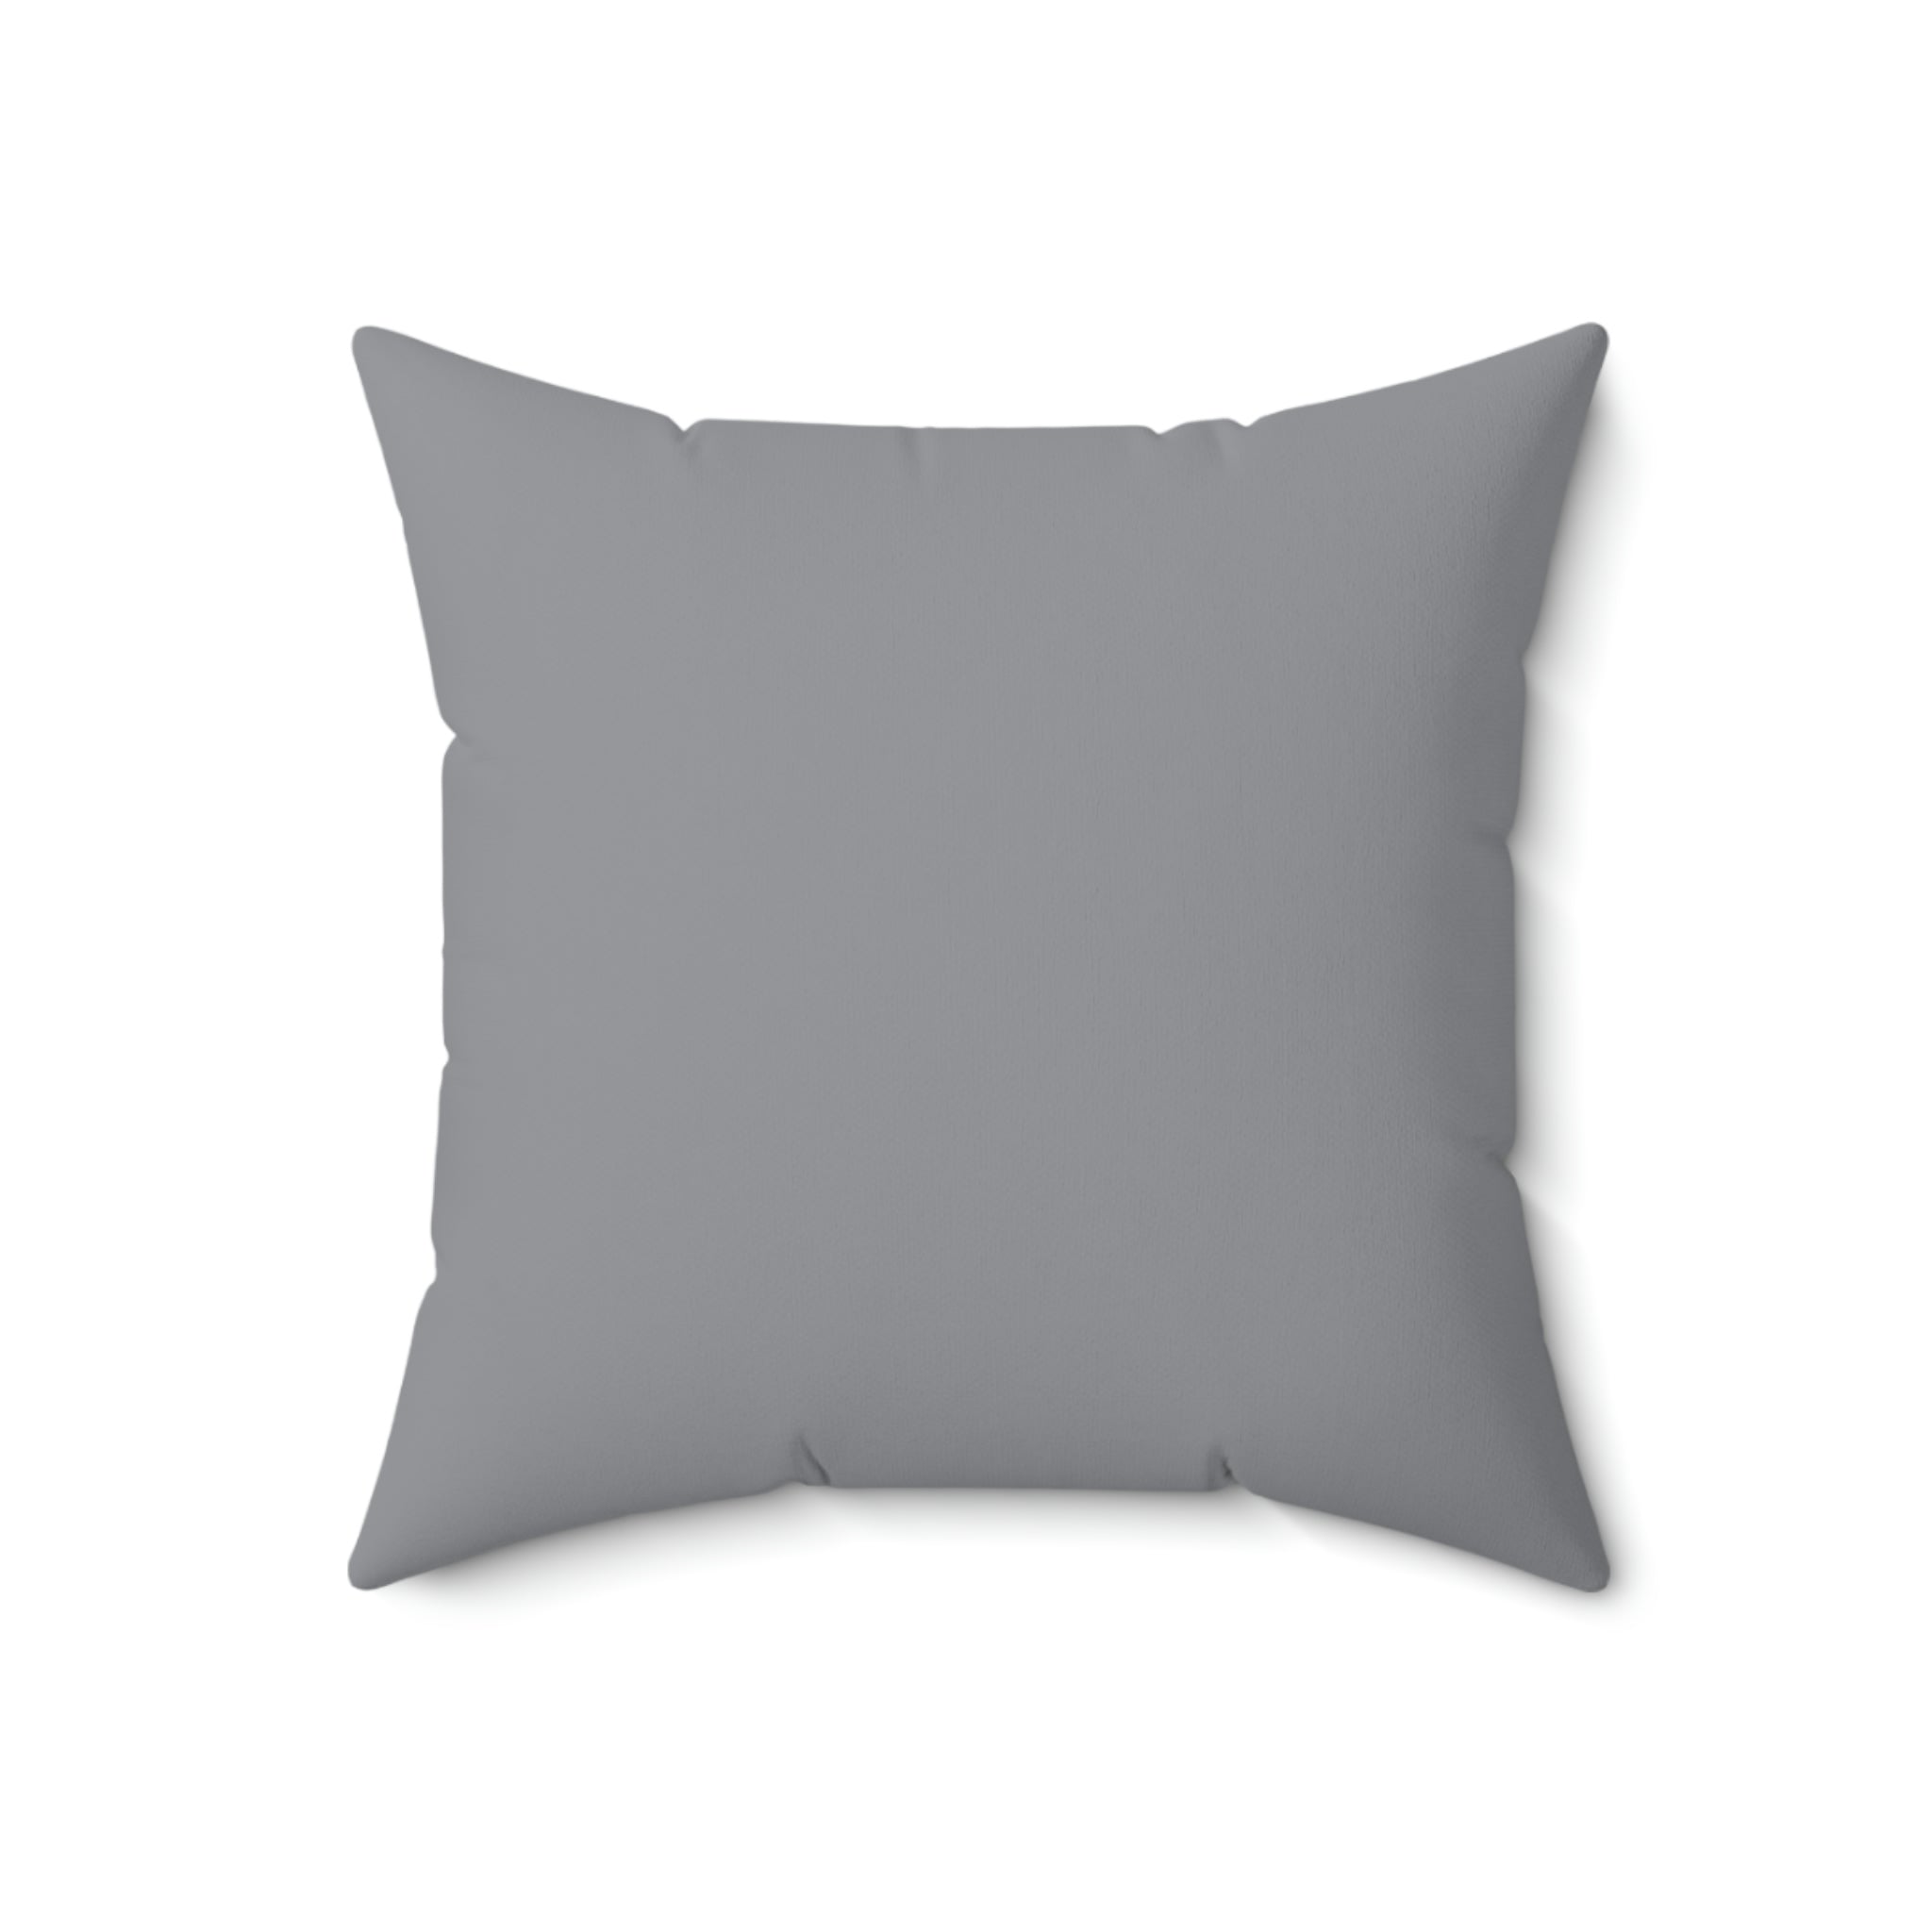 Spun Polyester Pillow Jacks pattern